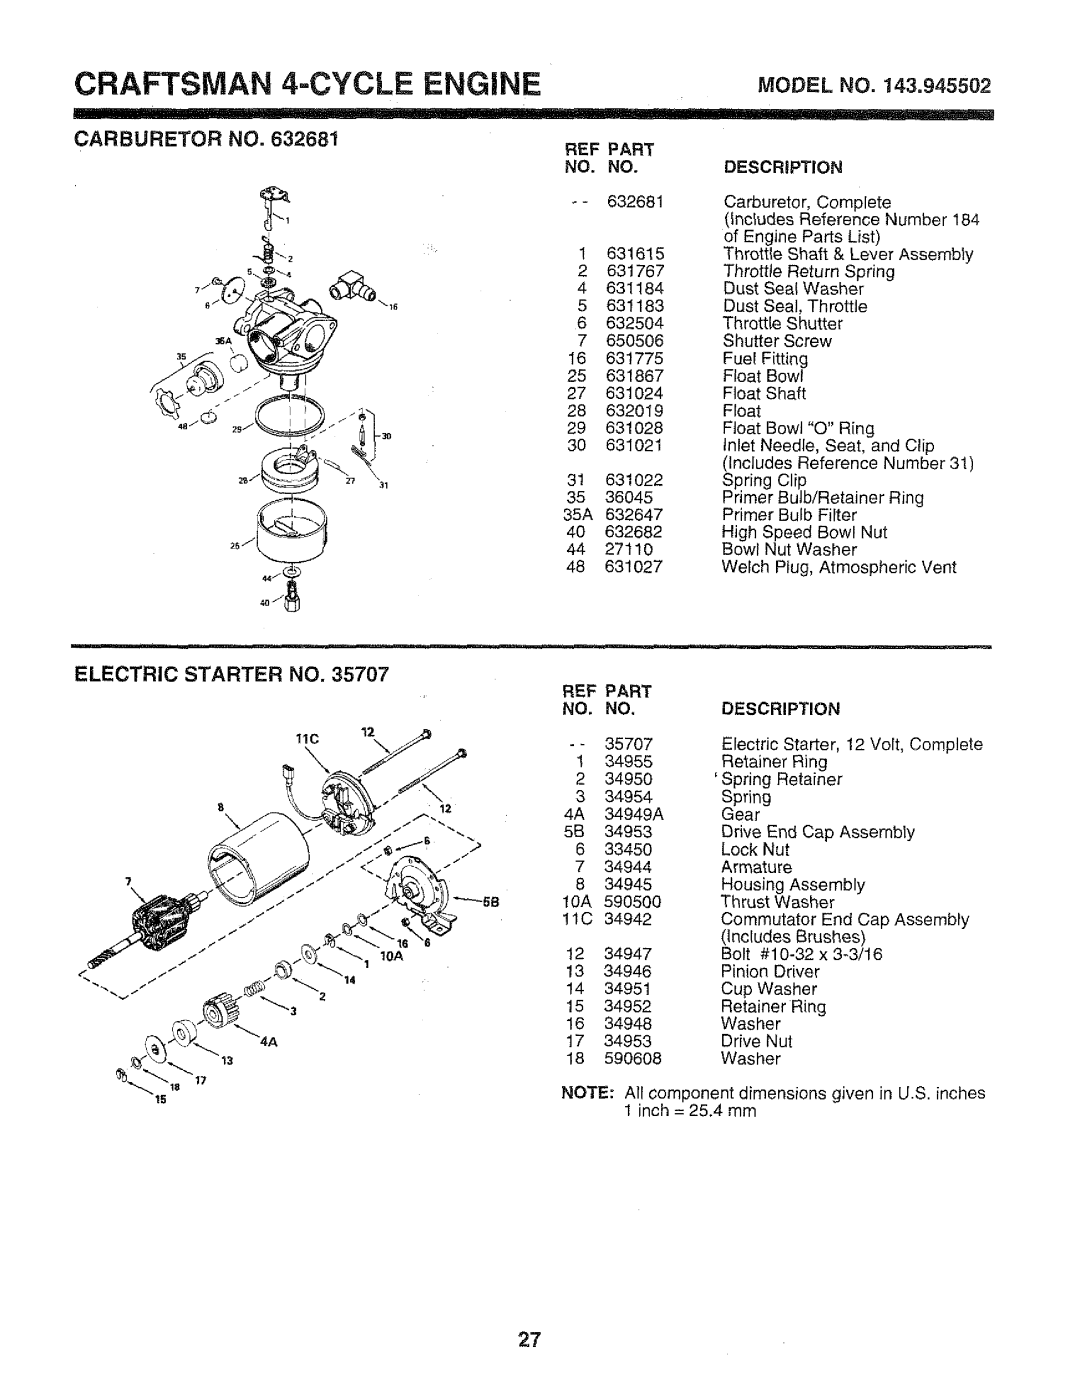 Craftsman 917.37459 owner manual Craftsman, 4=CYCLE ENGINE, MODELNO.143.945502, Carburetor, 632681, Electric Starter No 